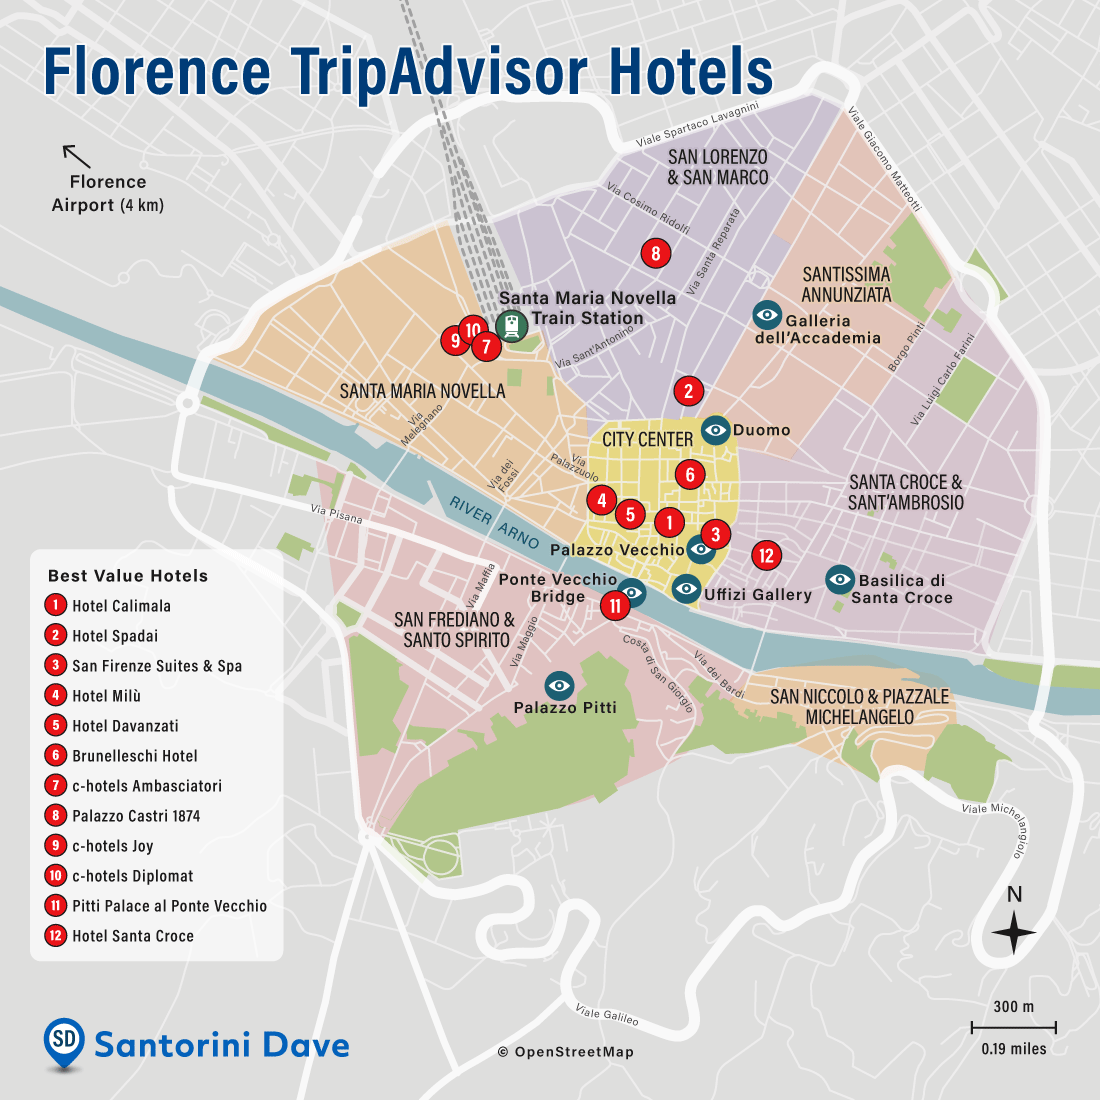 Florence TripAdvisor Hotels